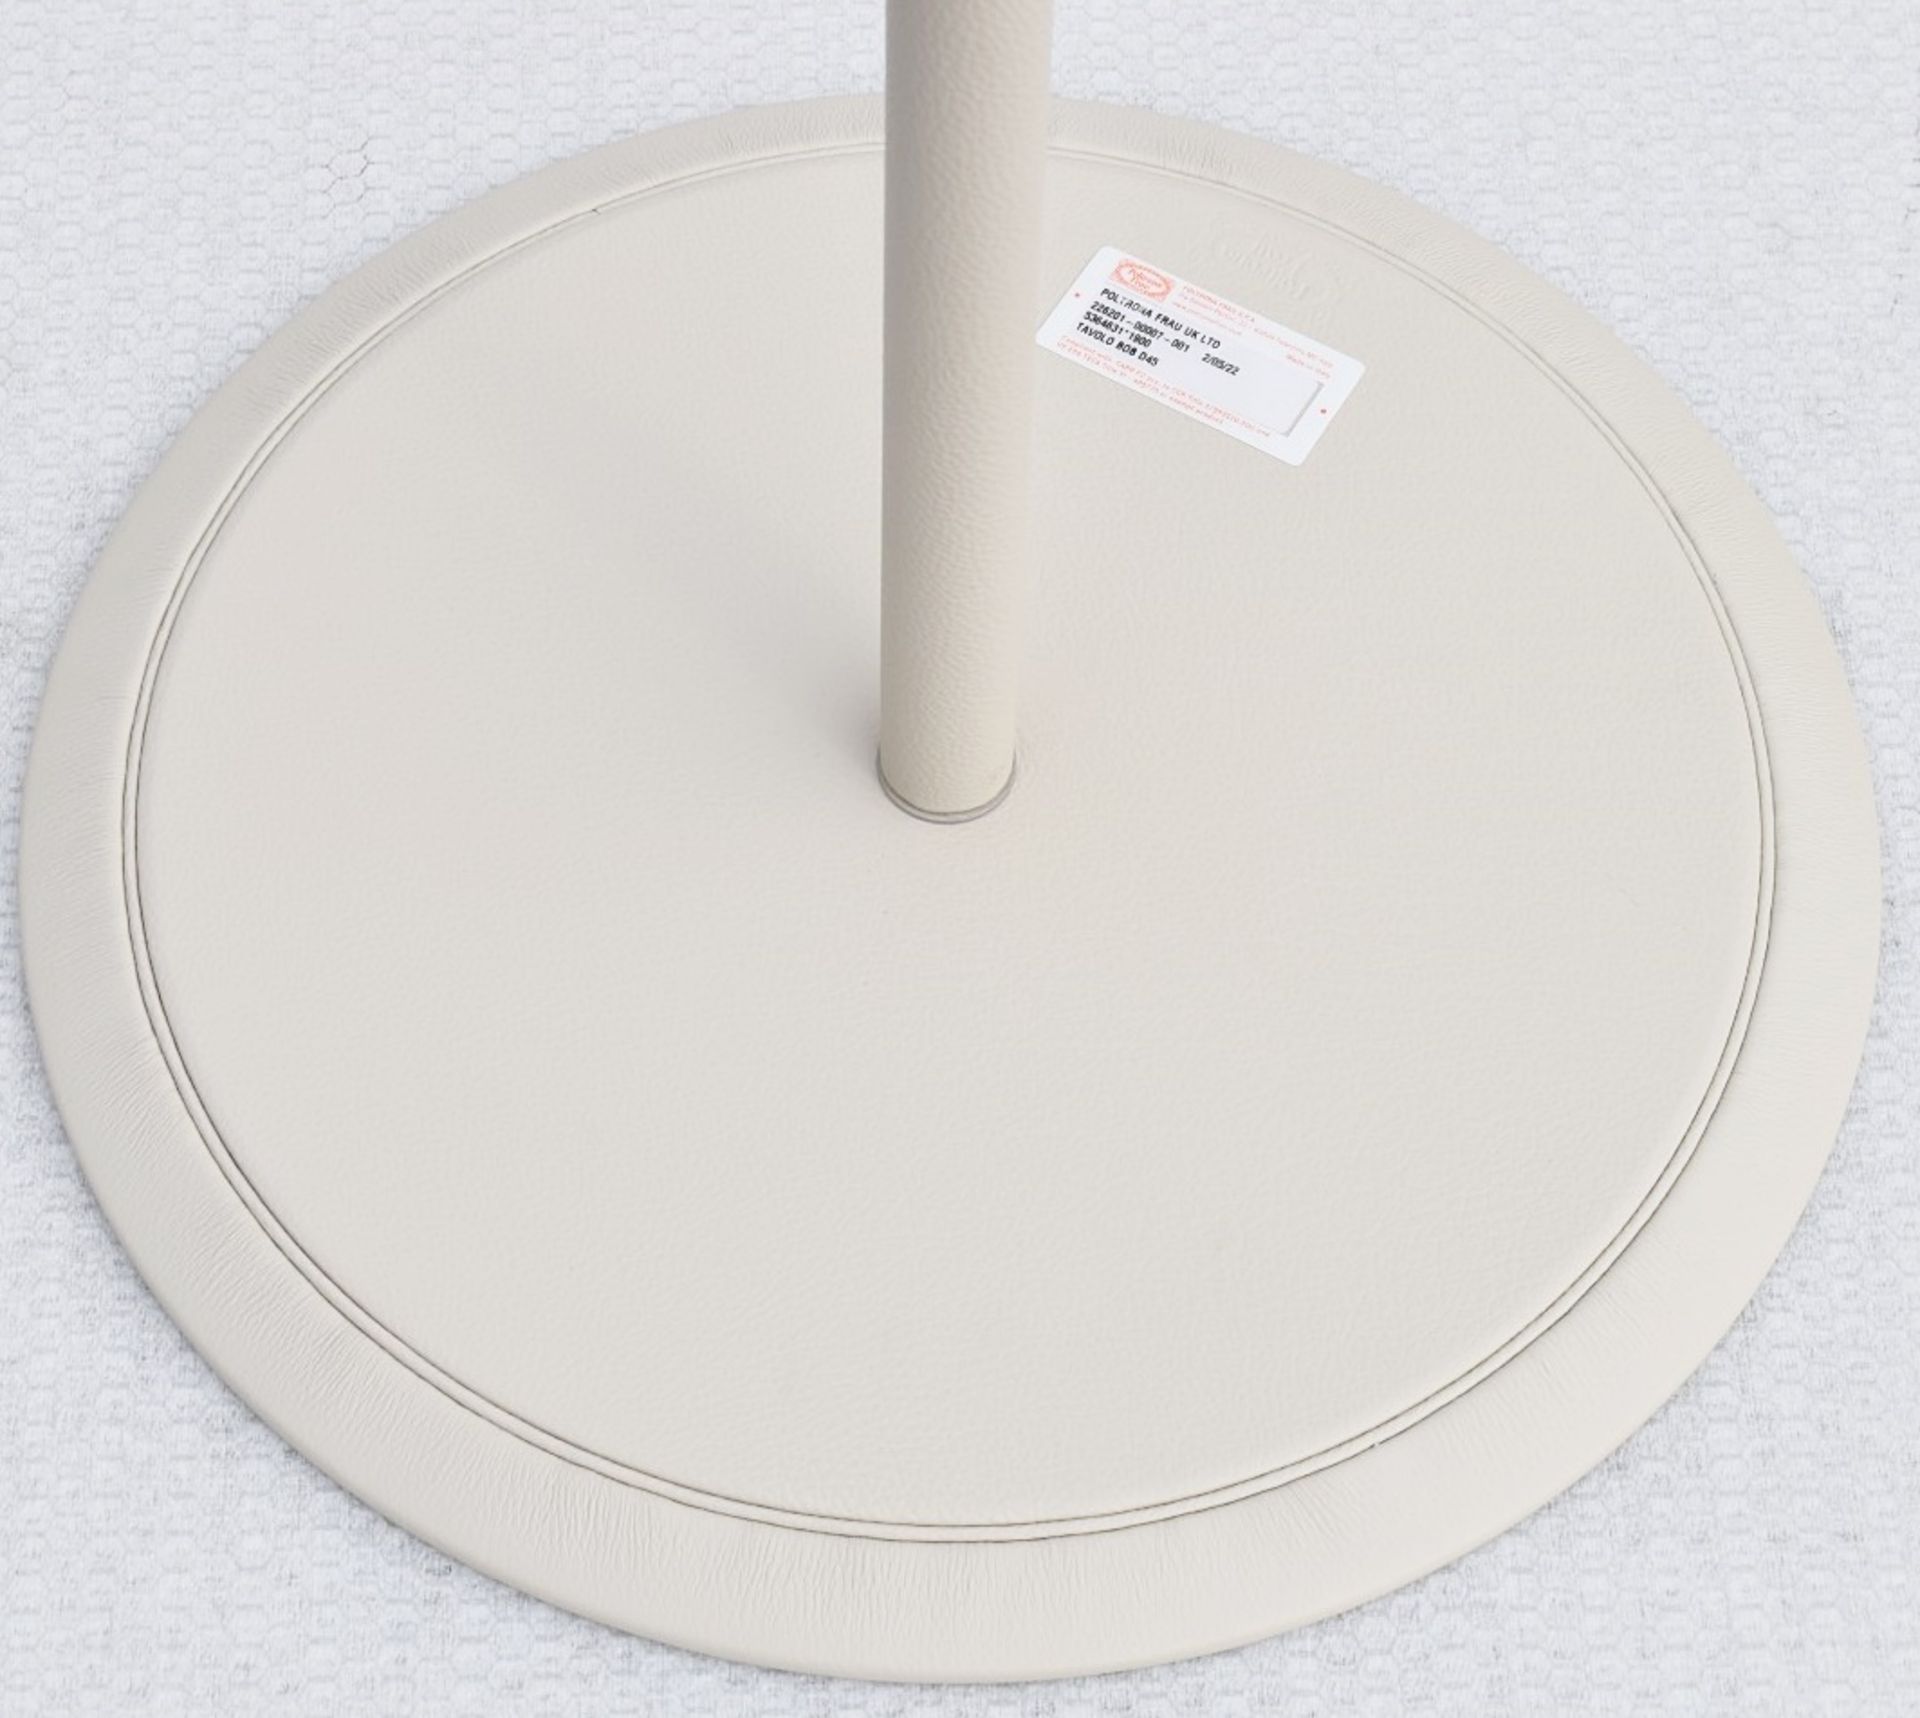 1 x POLTRONA FRAU 'Bob' Designer Leather Upholstered Coffee Table in Cream - Original Price £2,900 - Image 9 of 10